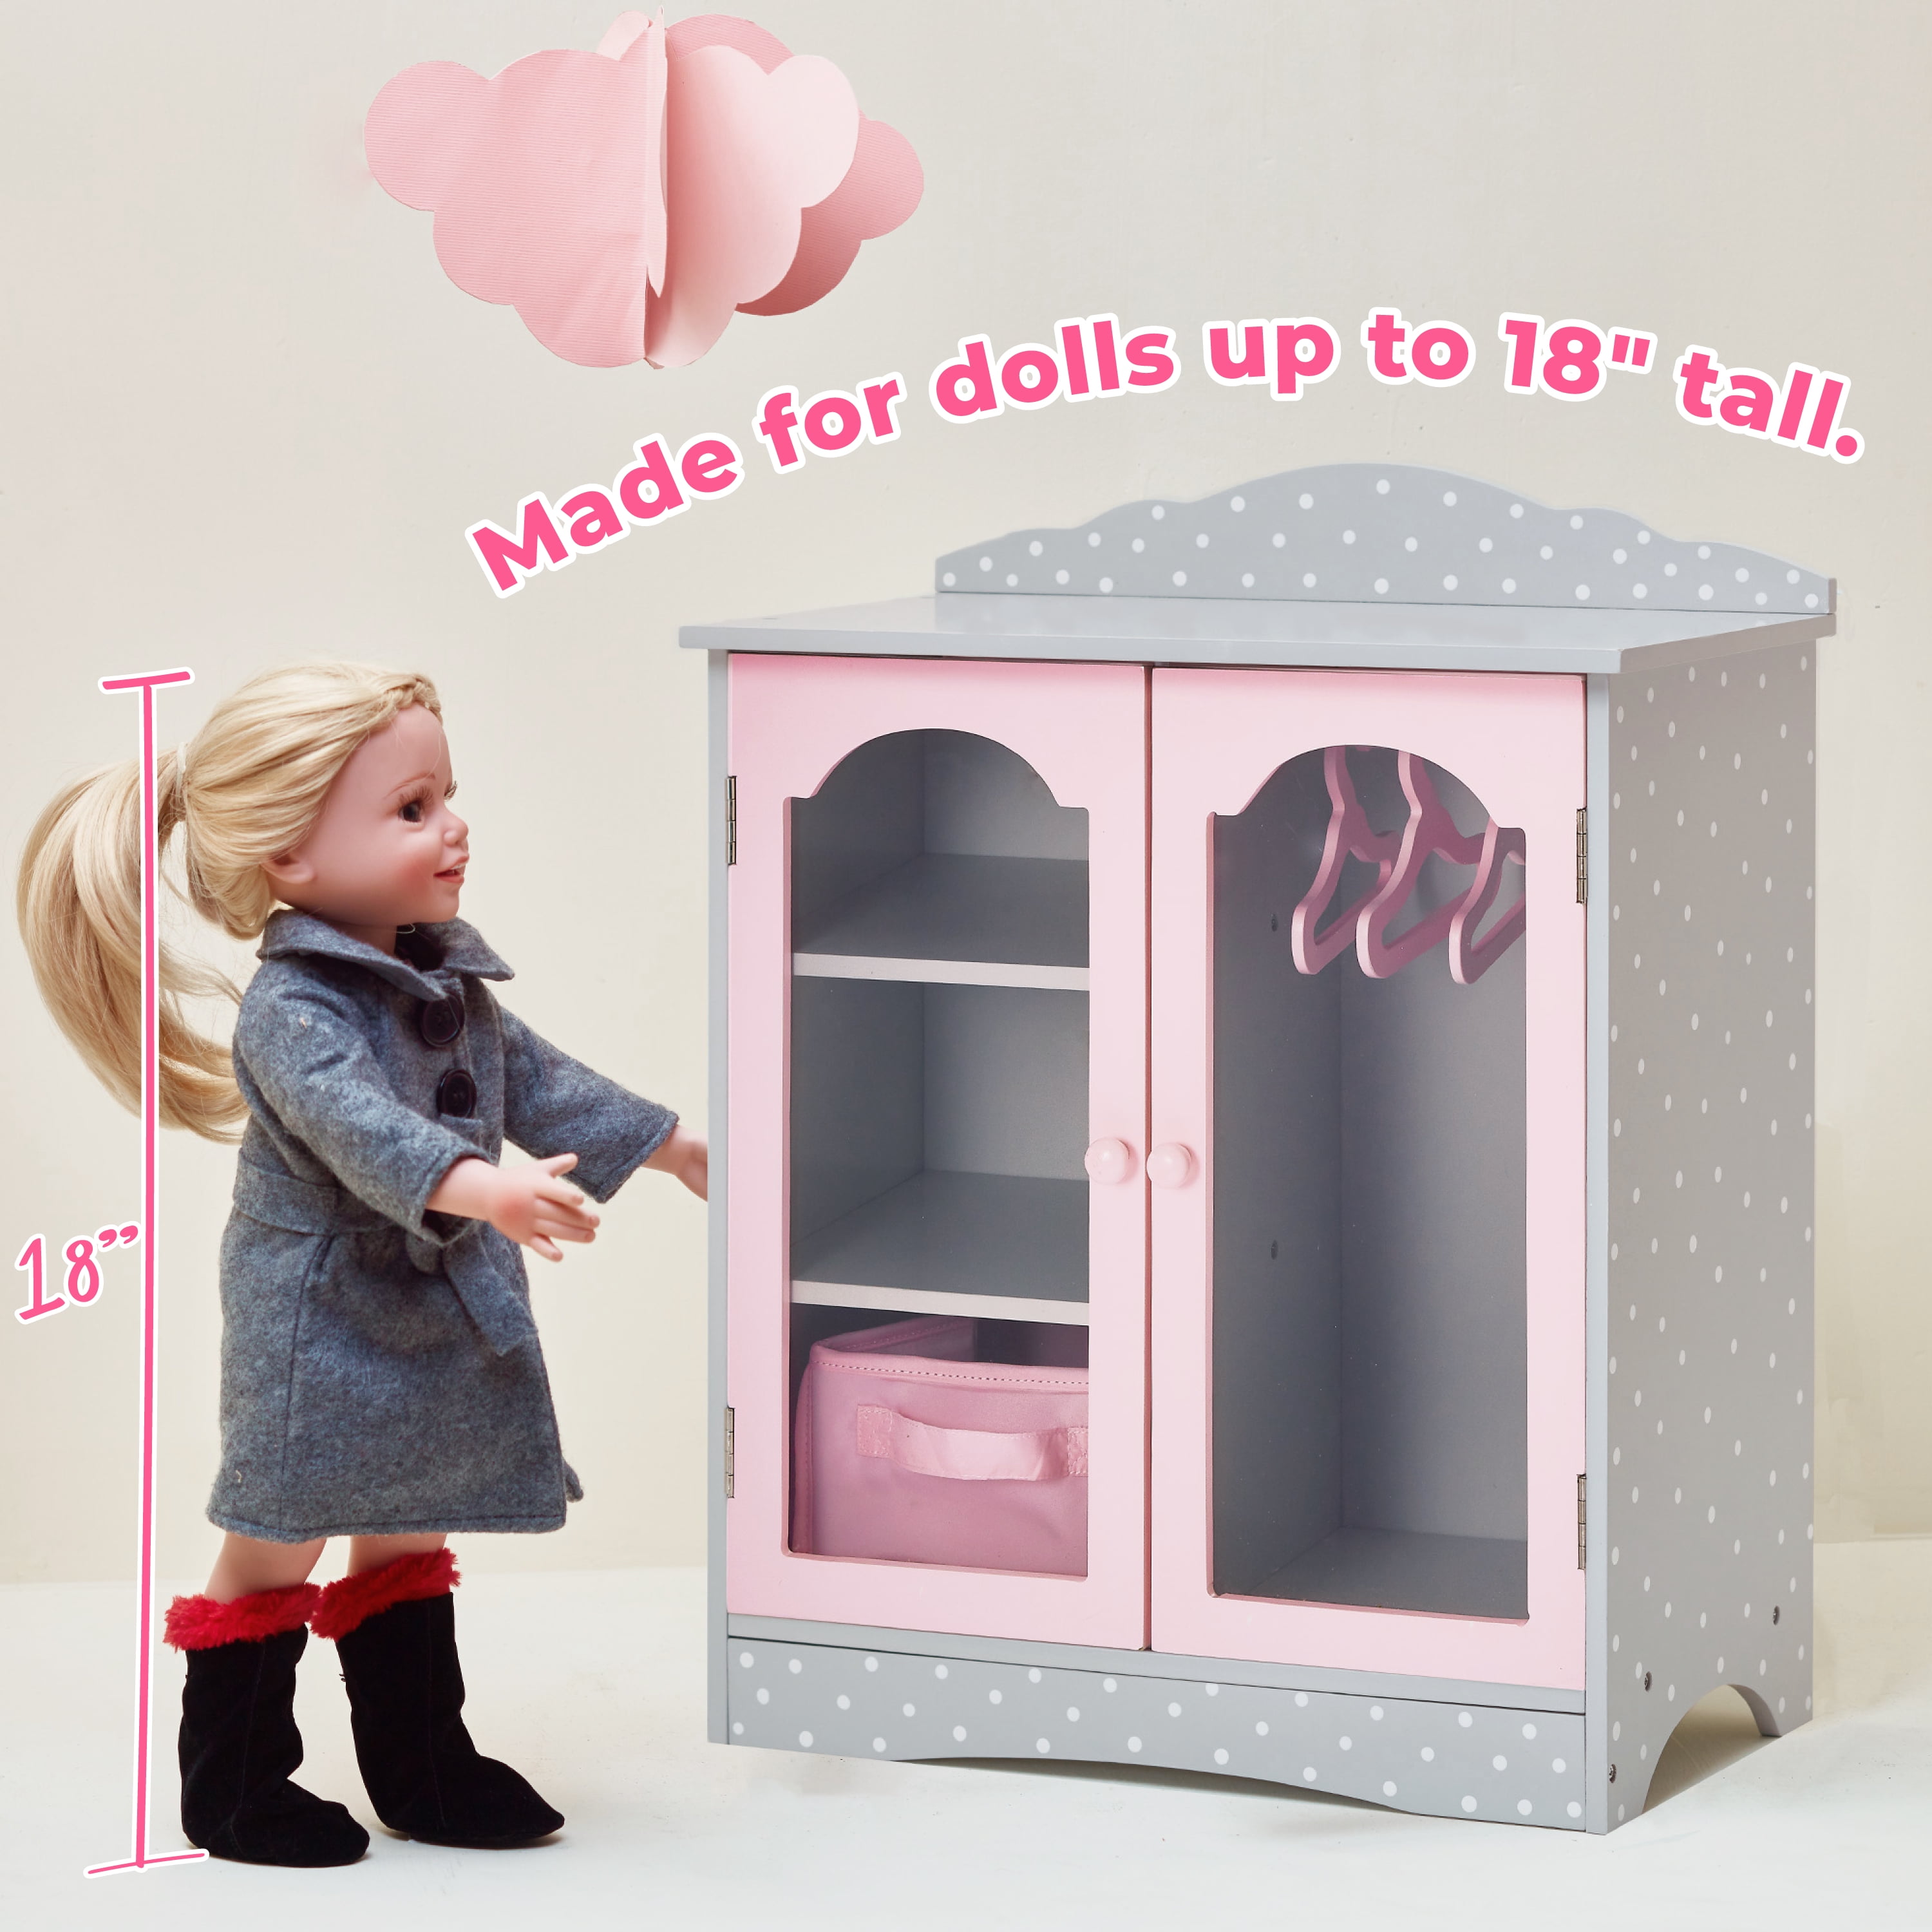 Kate Fantasy Doll Pink Closet Room Set